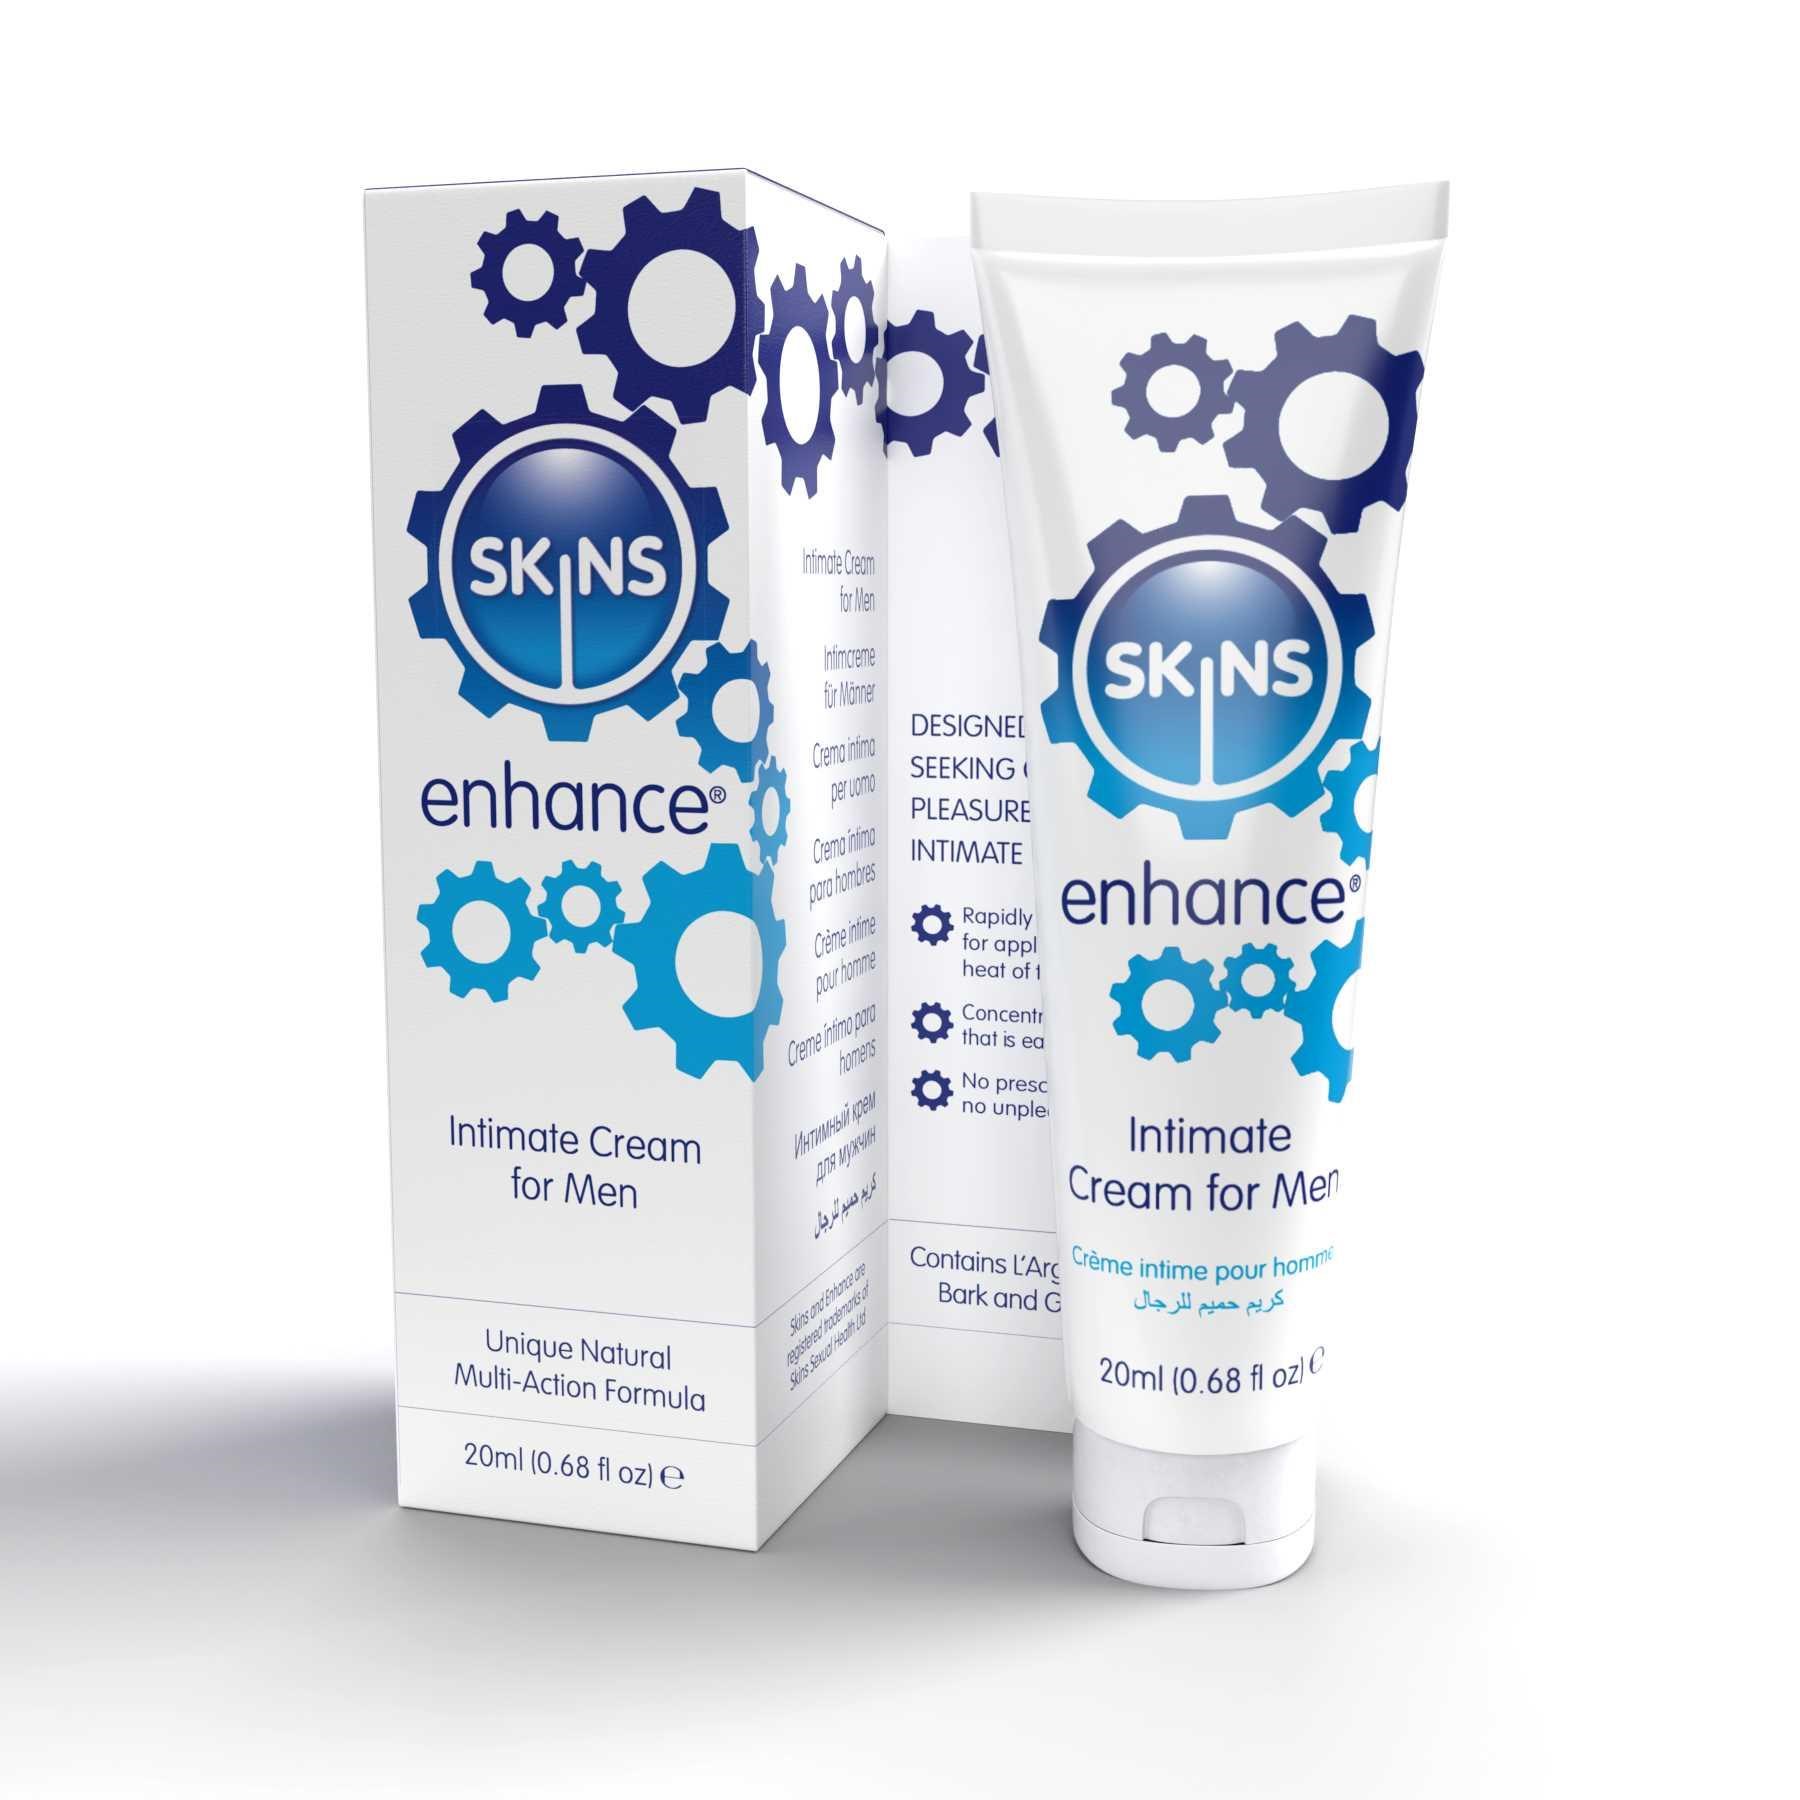 Skins Enhance Intimate Cream 20ml box & tube front